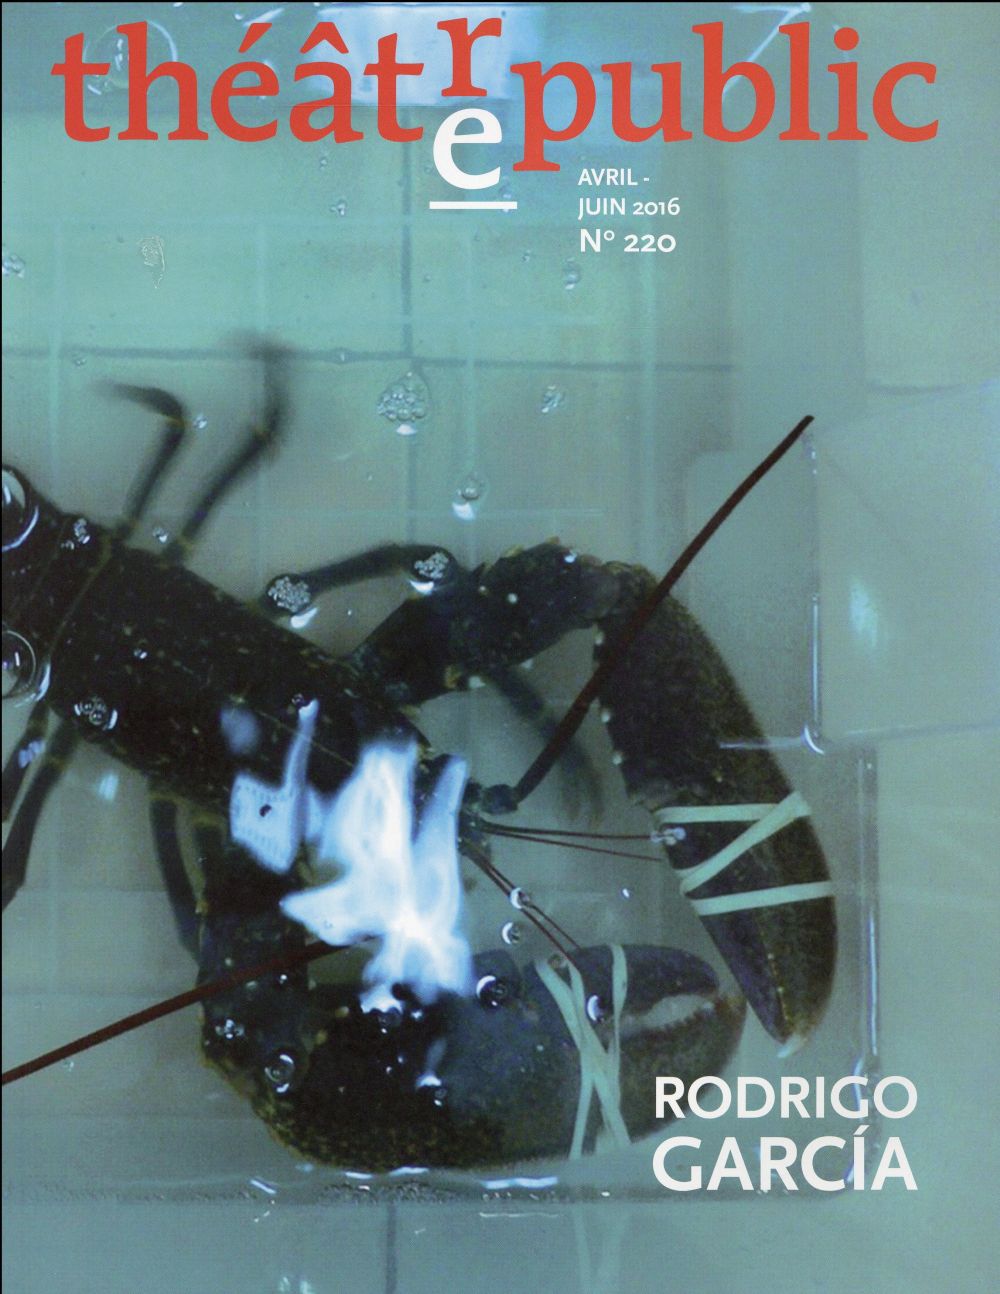 THEATRE PUBLIC N220 - RODRIGO GARCIA